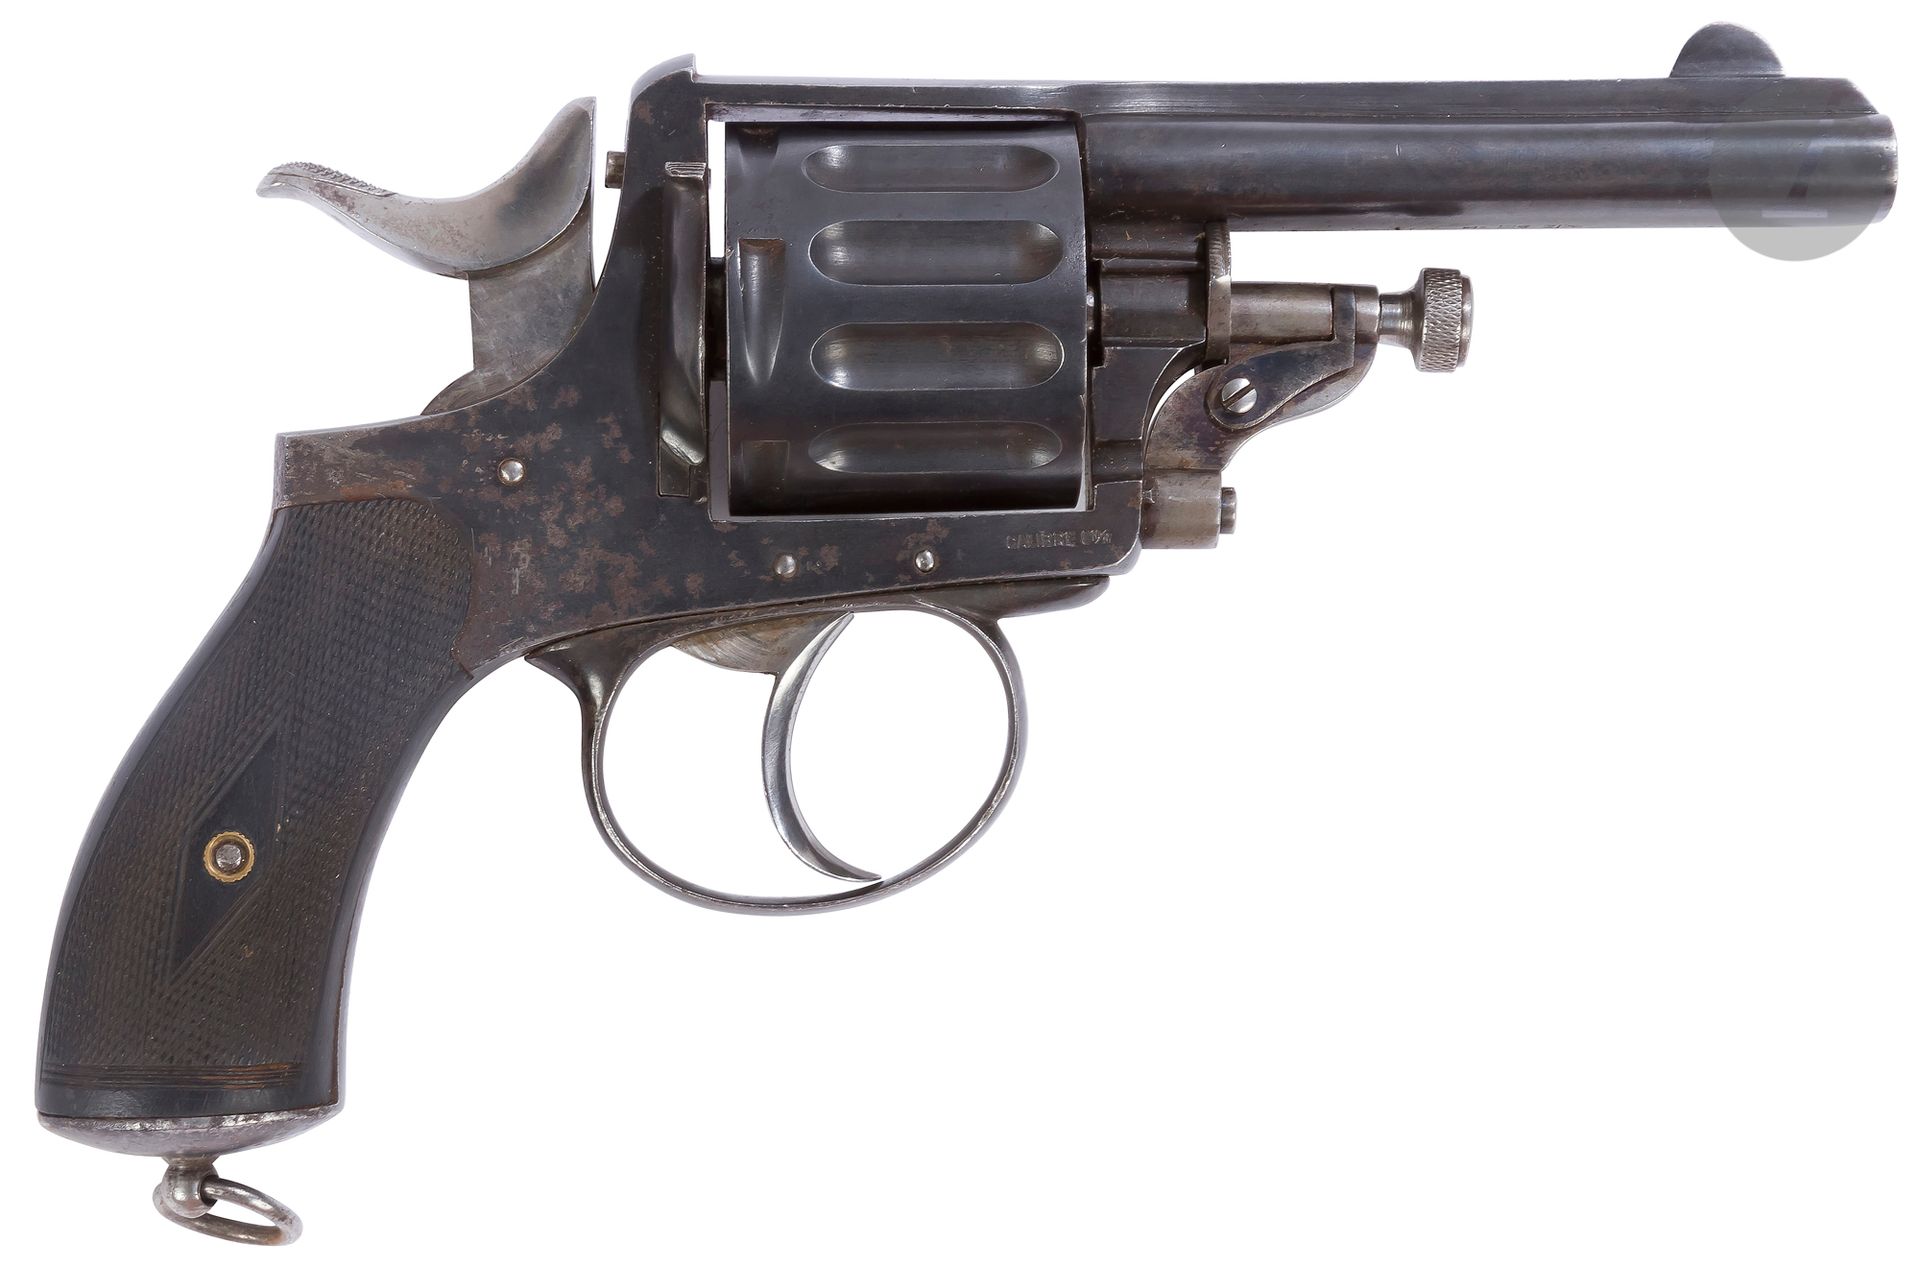 Null 罕见的左轮手枪 "L'Explorateur mitraille"，有12发子弹，每次发射两发，口径6毫米
。封闭式框架，顶部标有 "法国圣艾蒂安军械&hellip;